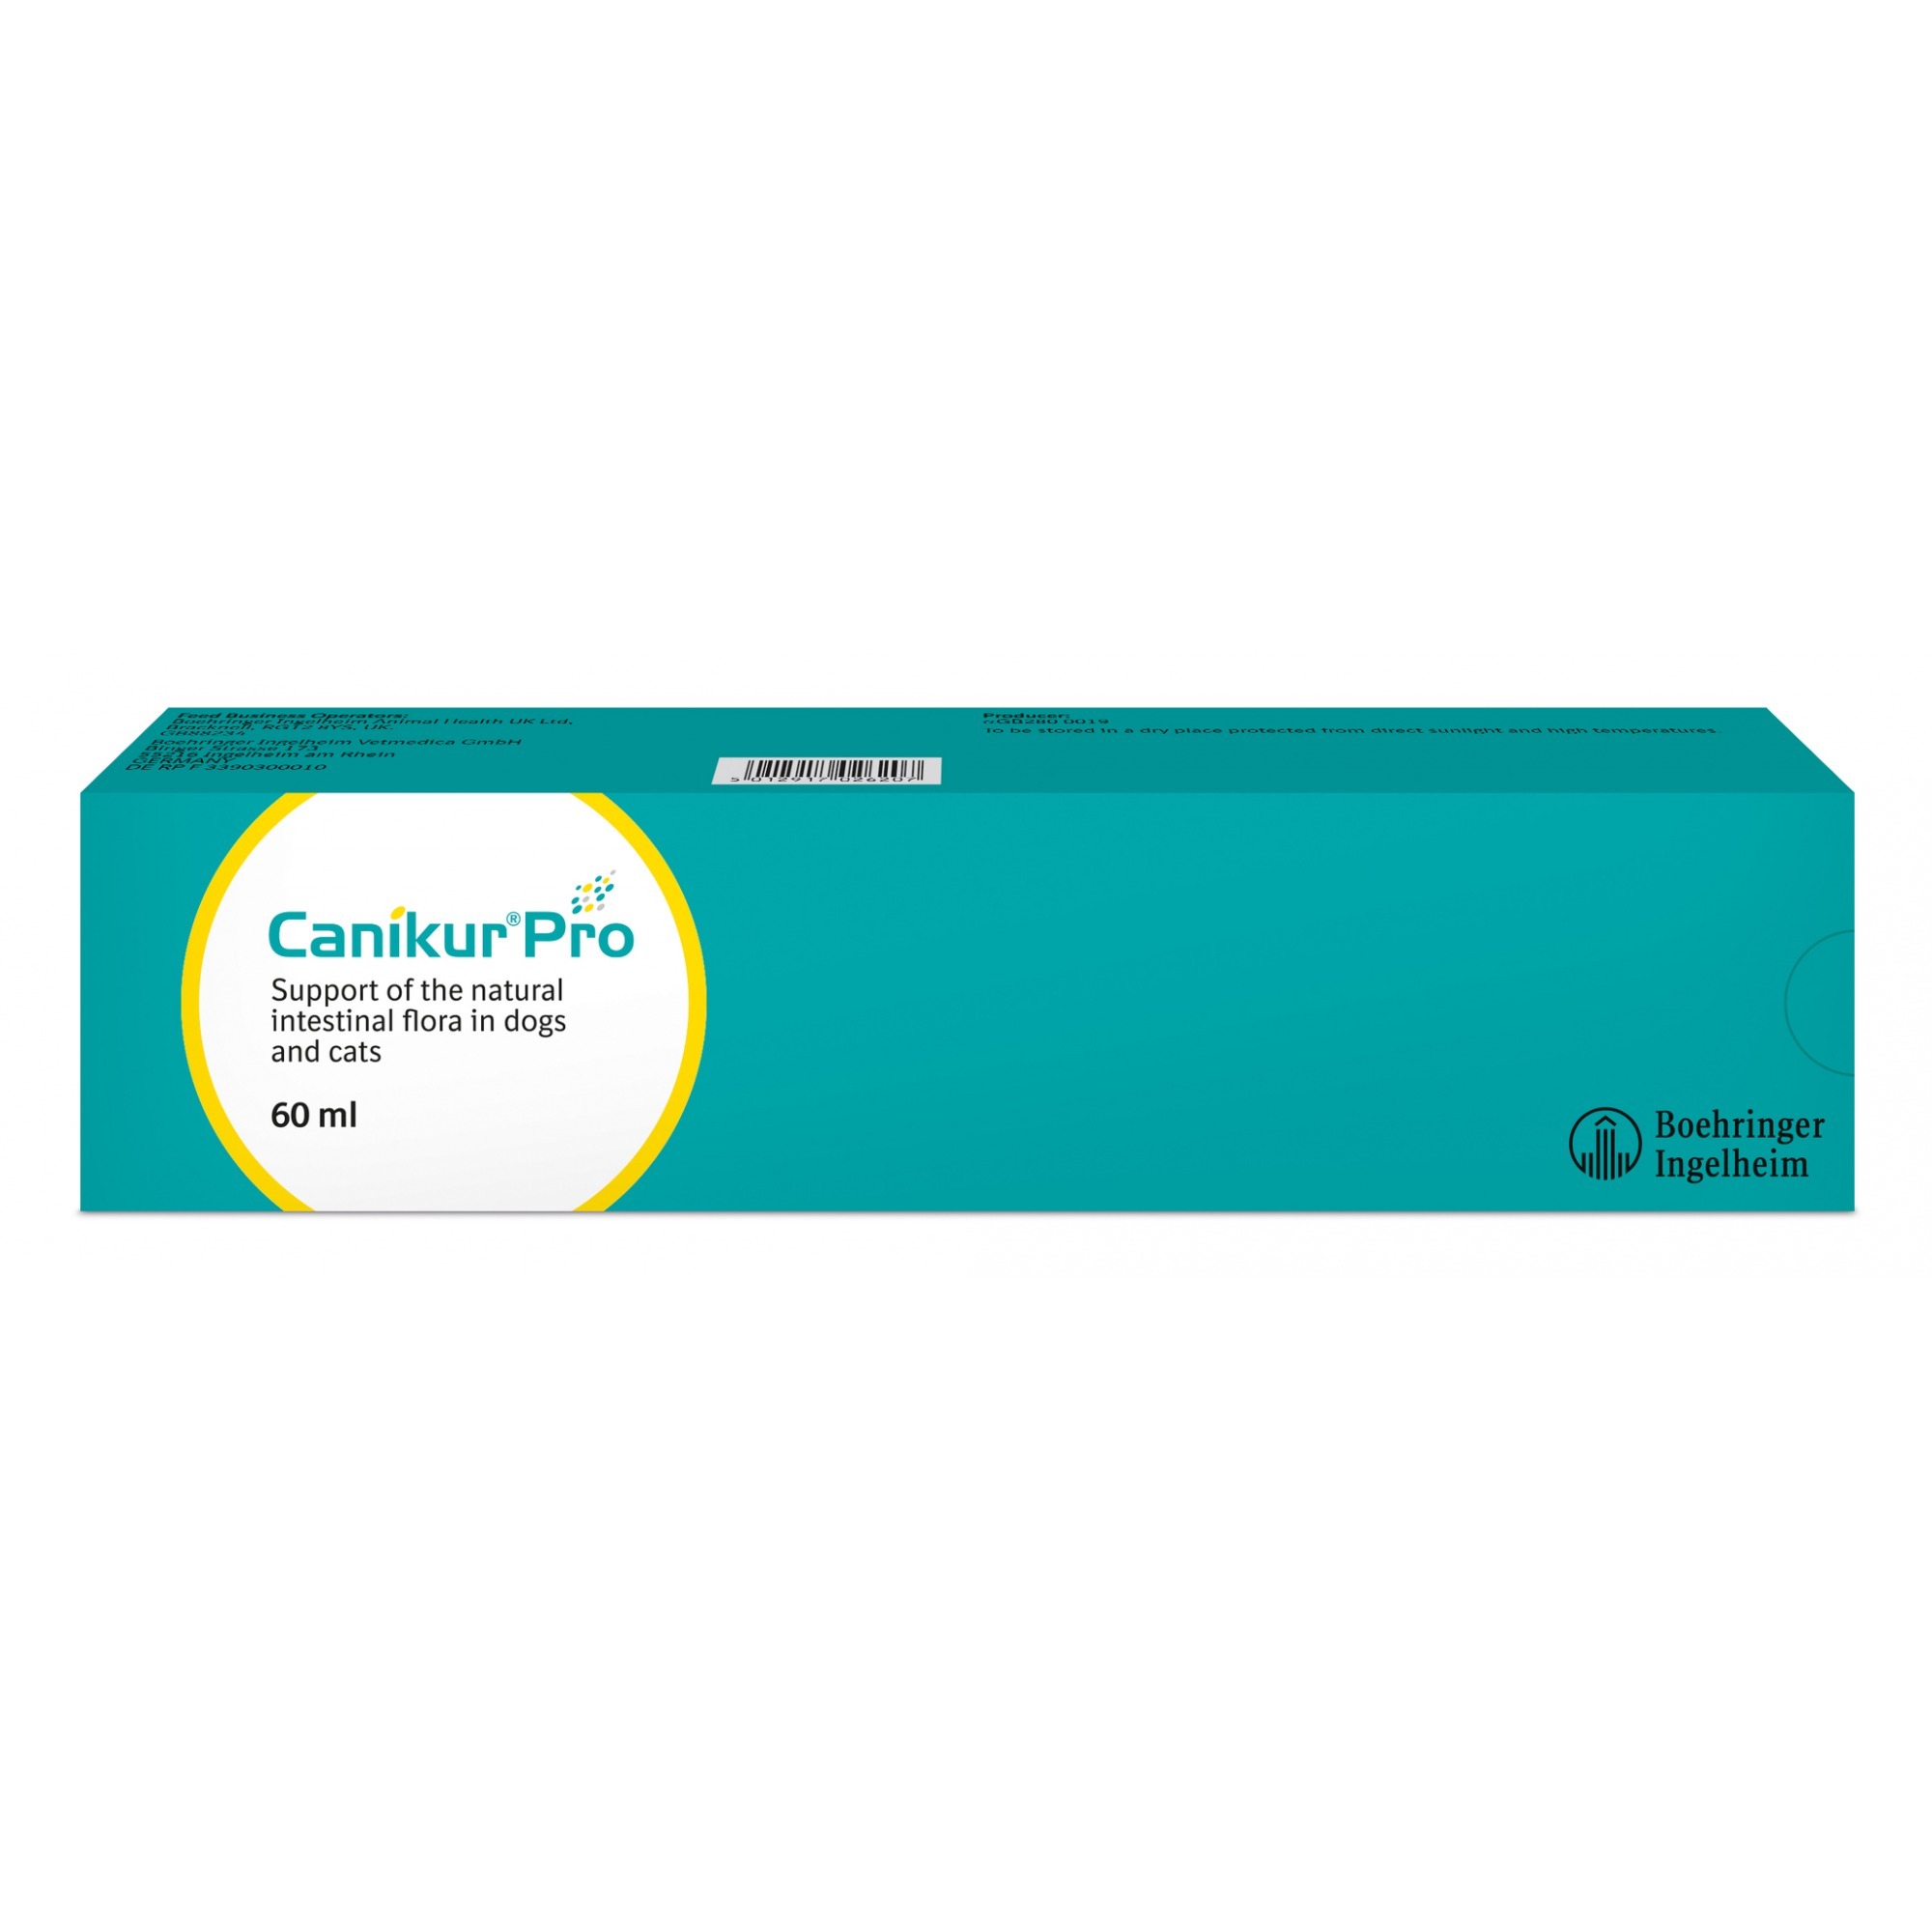 Canikur Pro Paste Syringe - 60ml for sale online | eBay